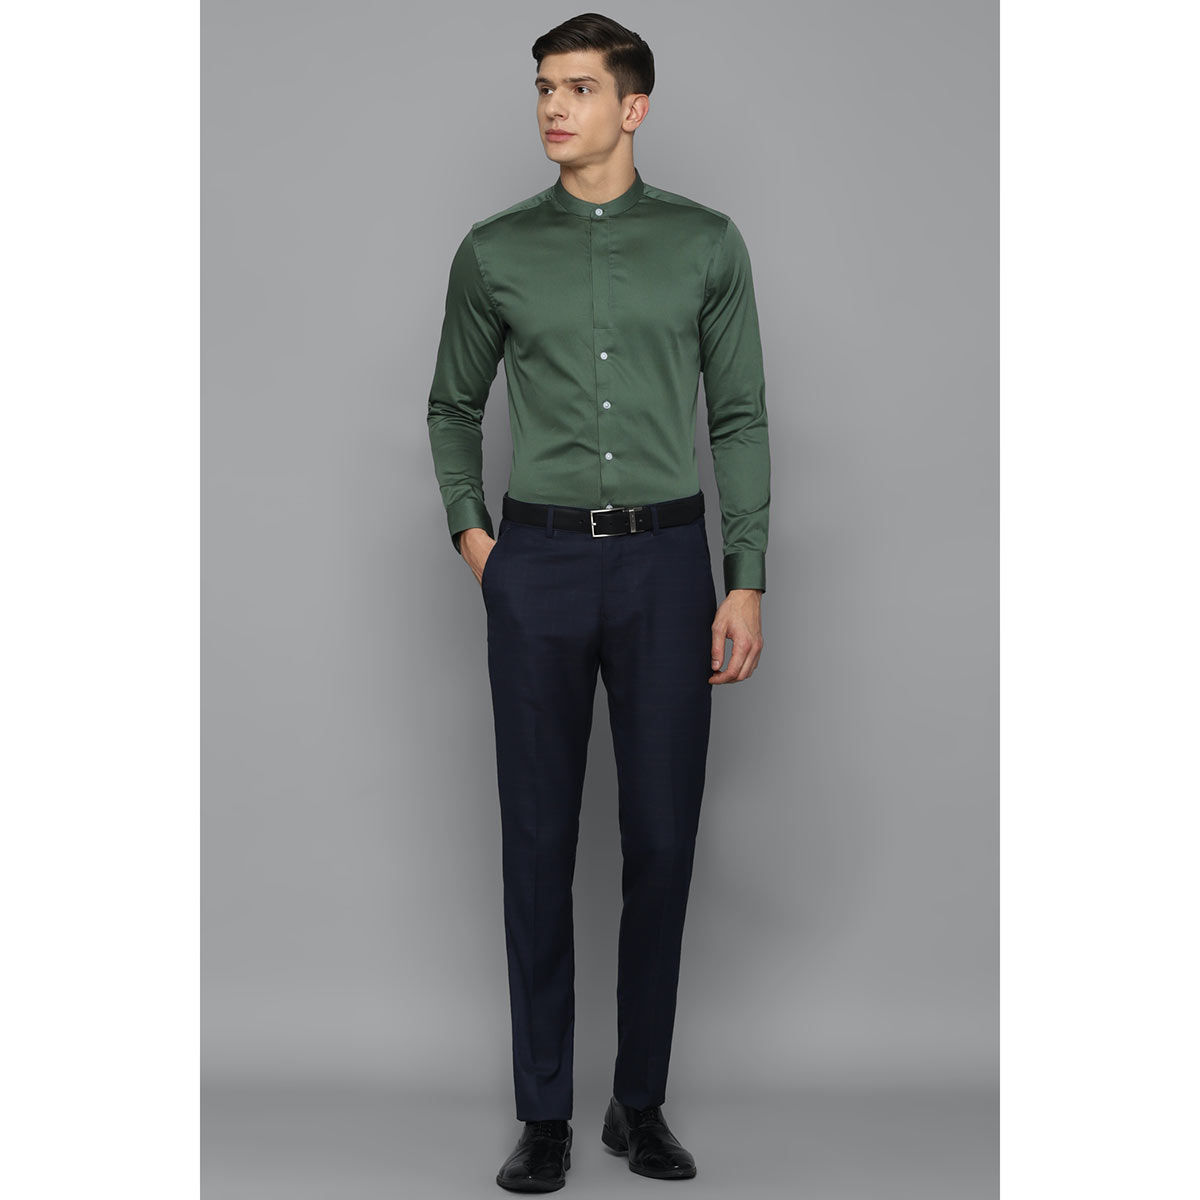 Buy Men Green Shirt Online - 818162 | Louis Philippe